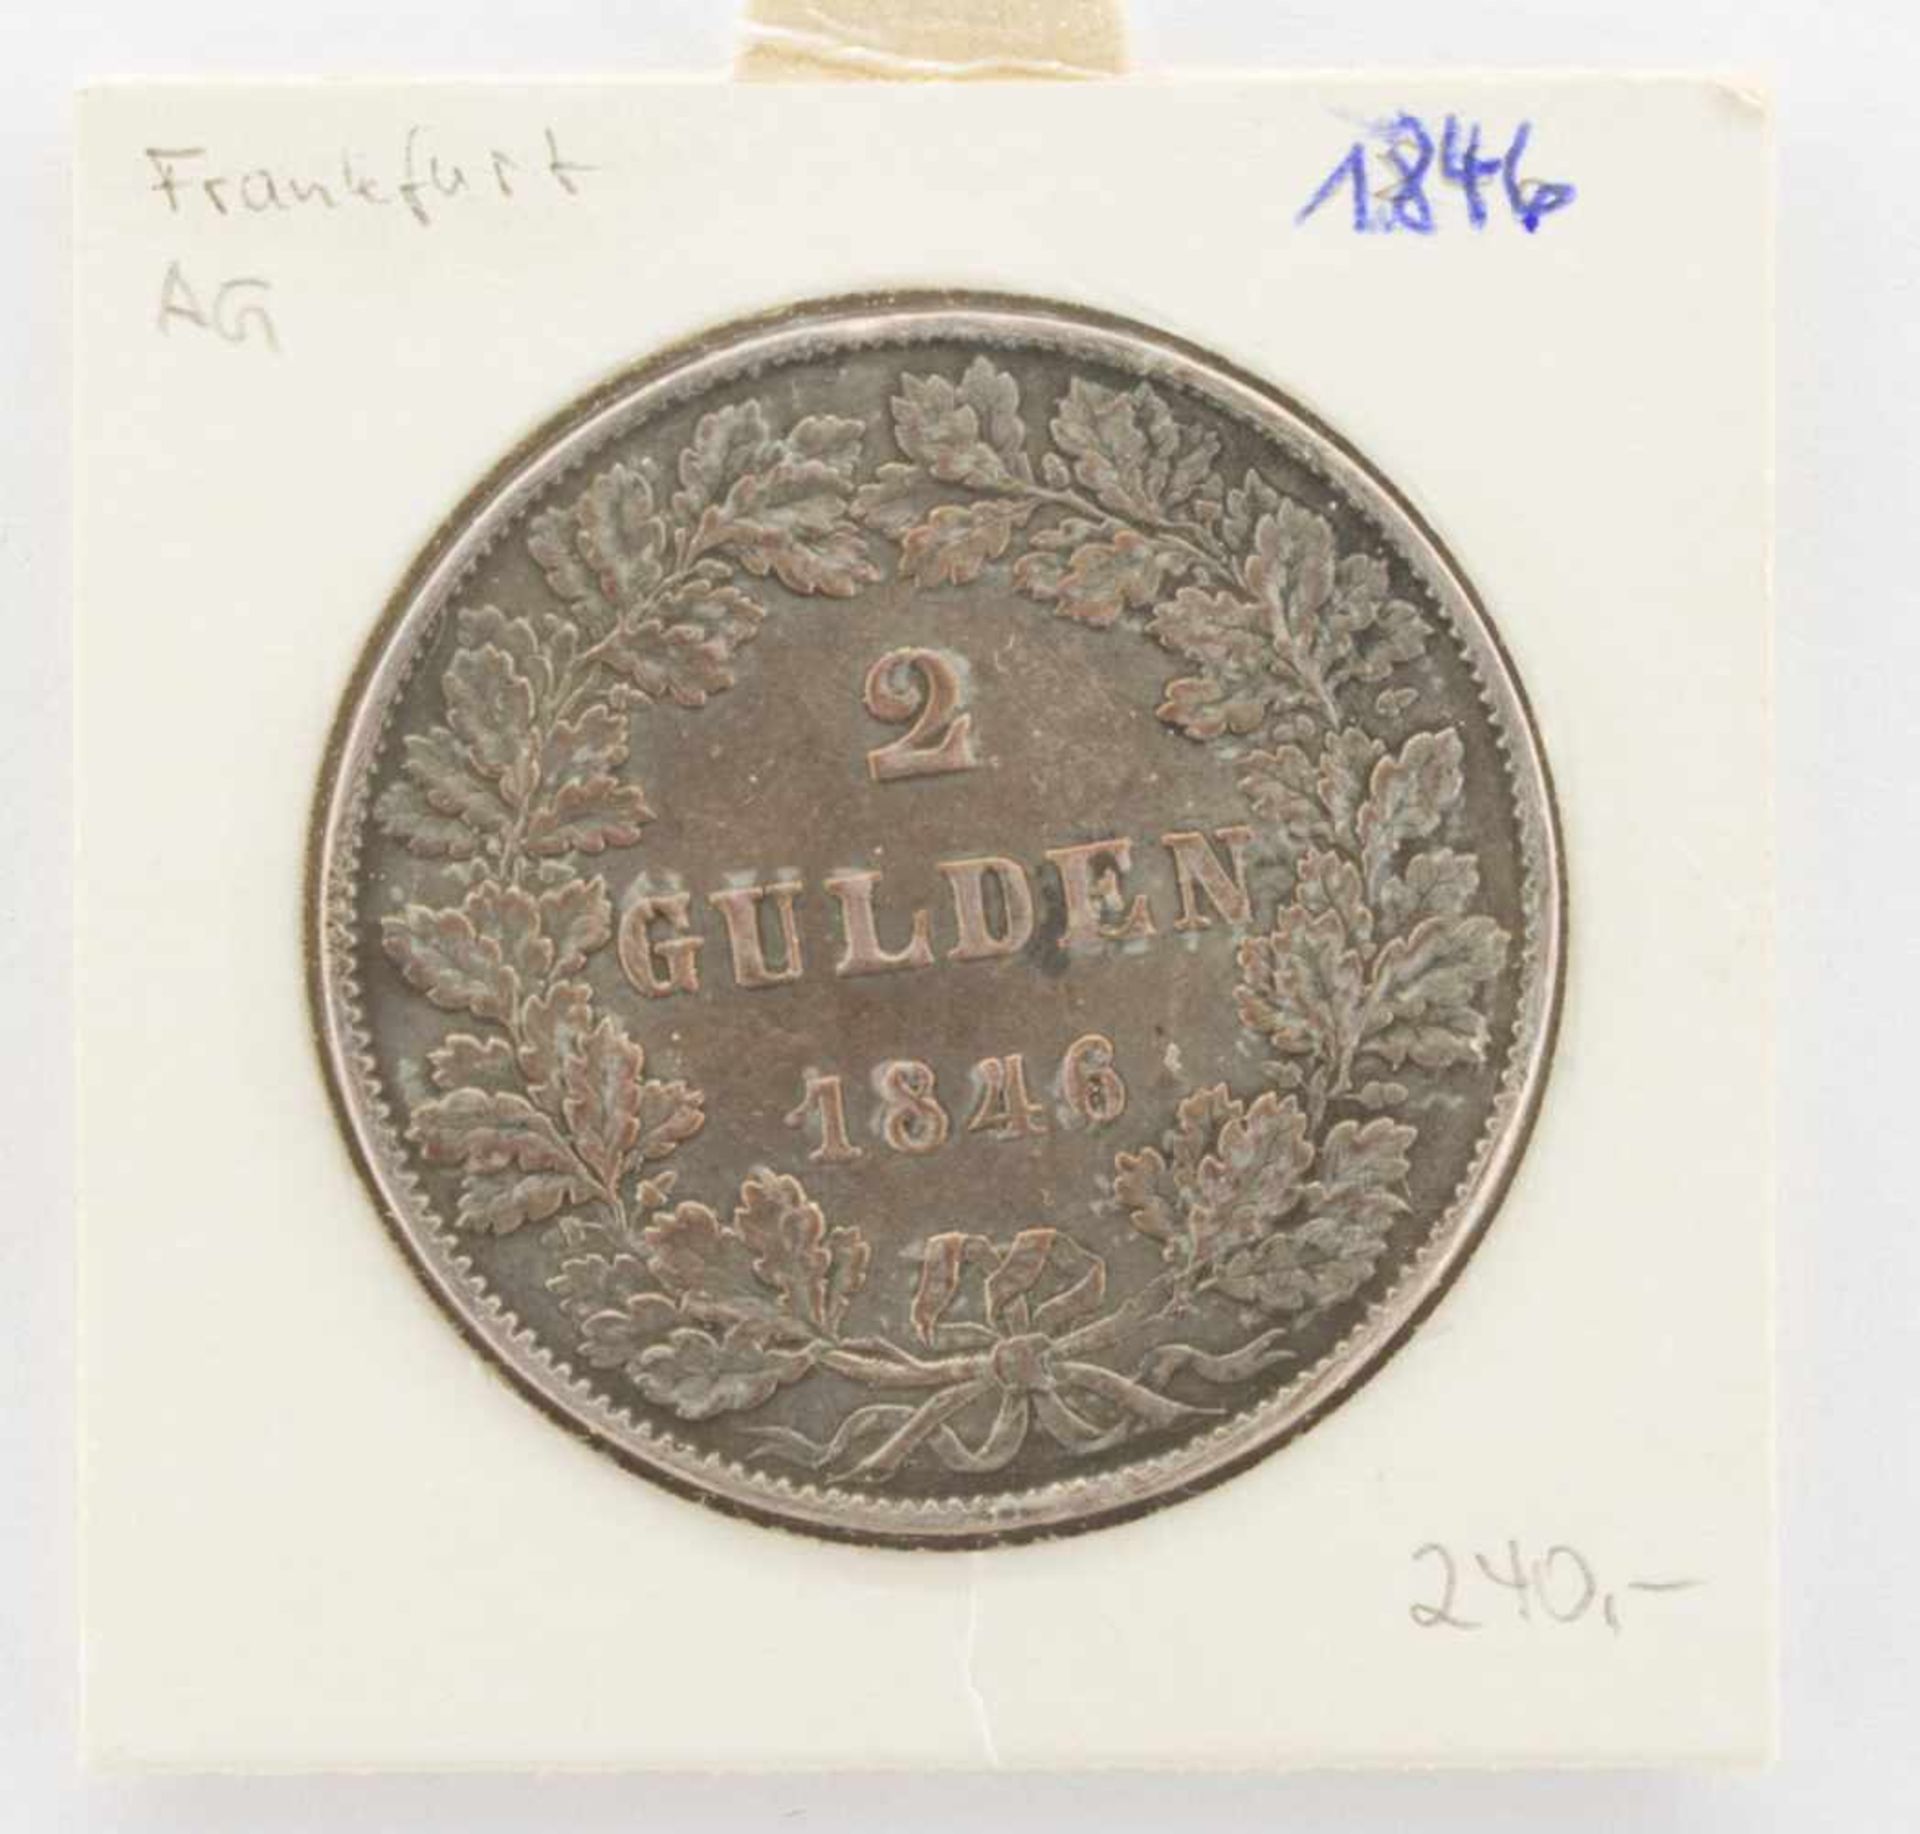 2 GuldenFrankfurt 1846, Silber, vzgl.